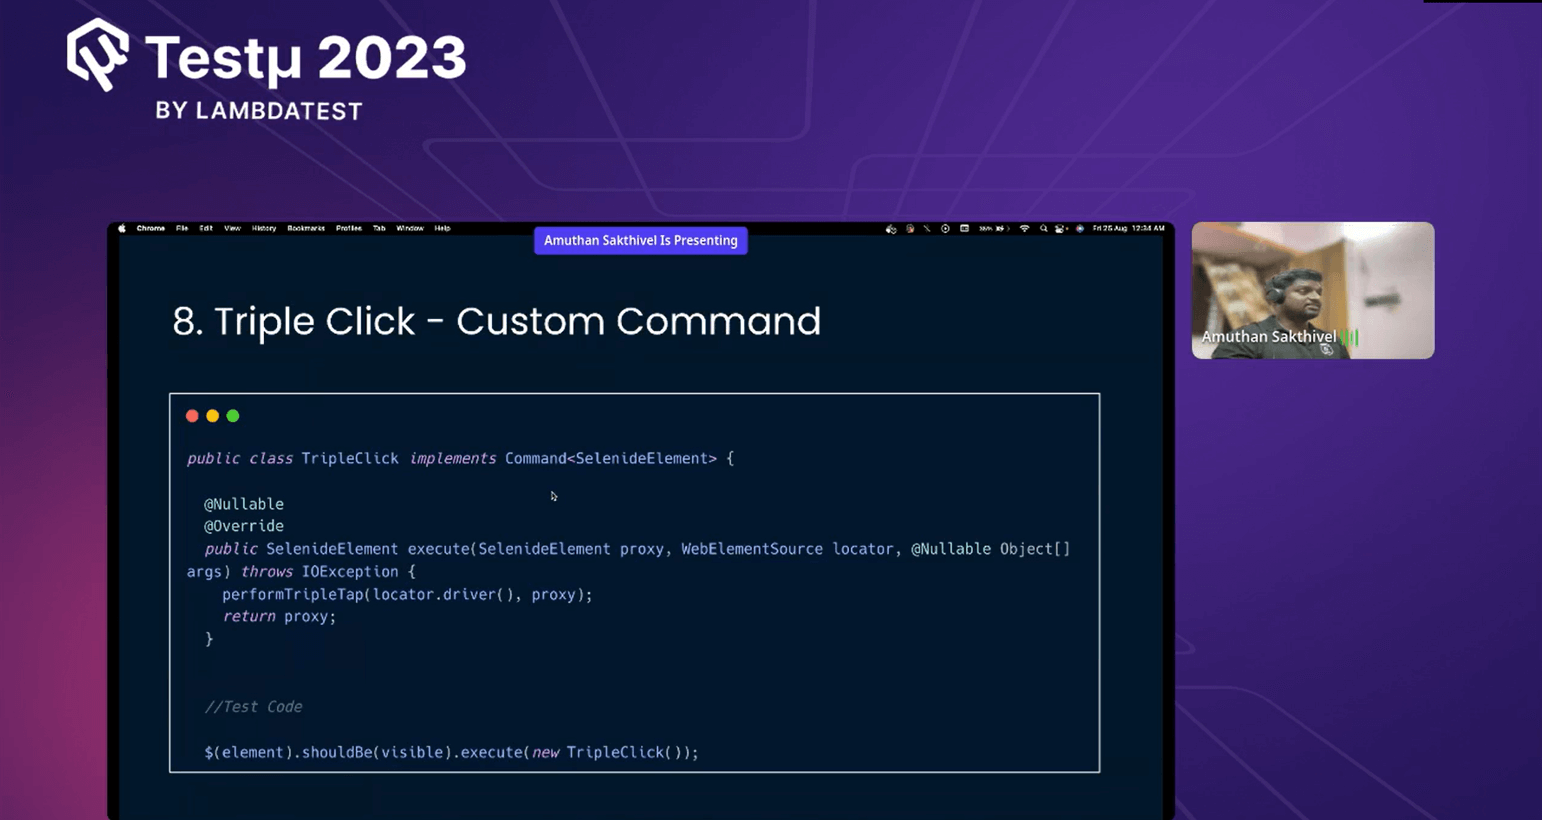 Triple Click - Custom Command